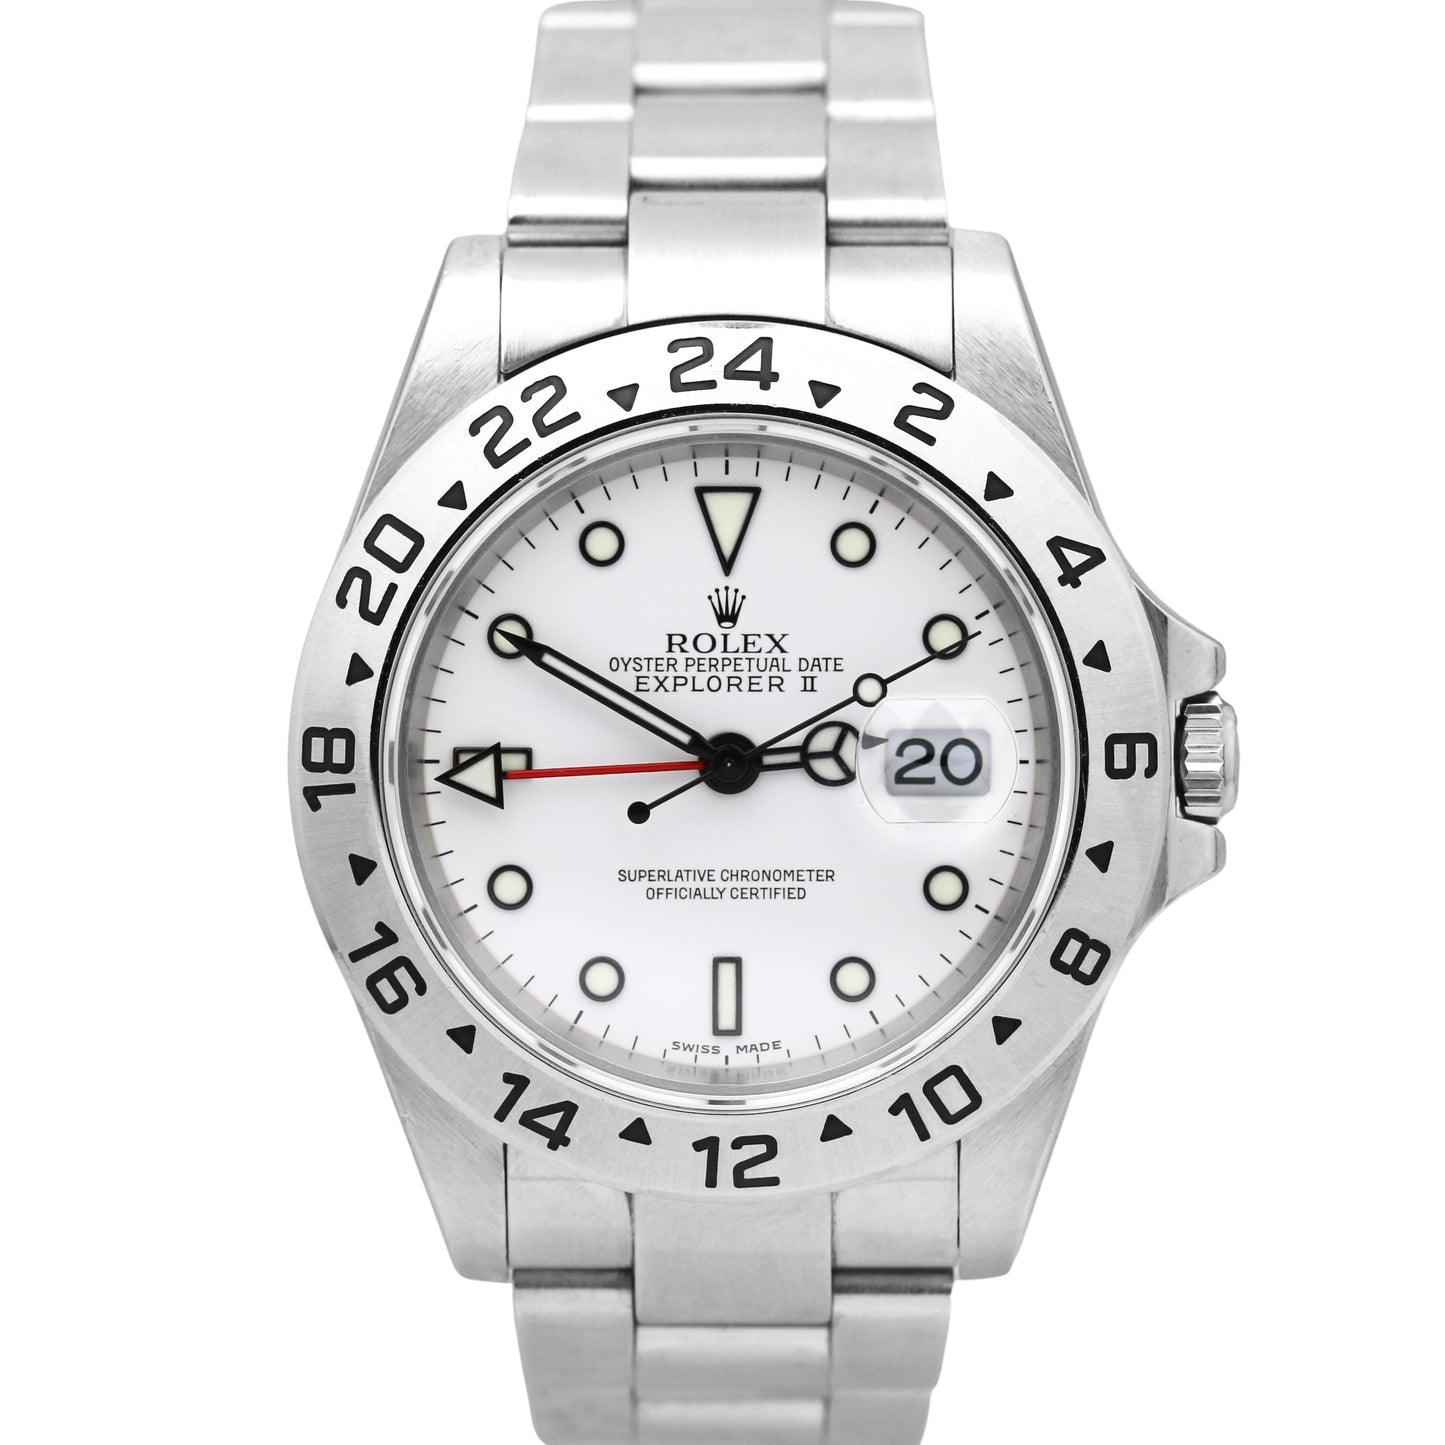 UNPOLISHED Rolex Explorer II Polar White NO-HOLES GMT Date Watch 40mm 16570